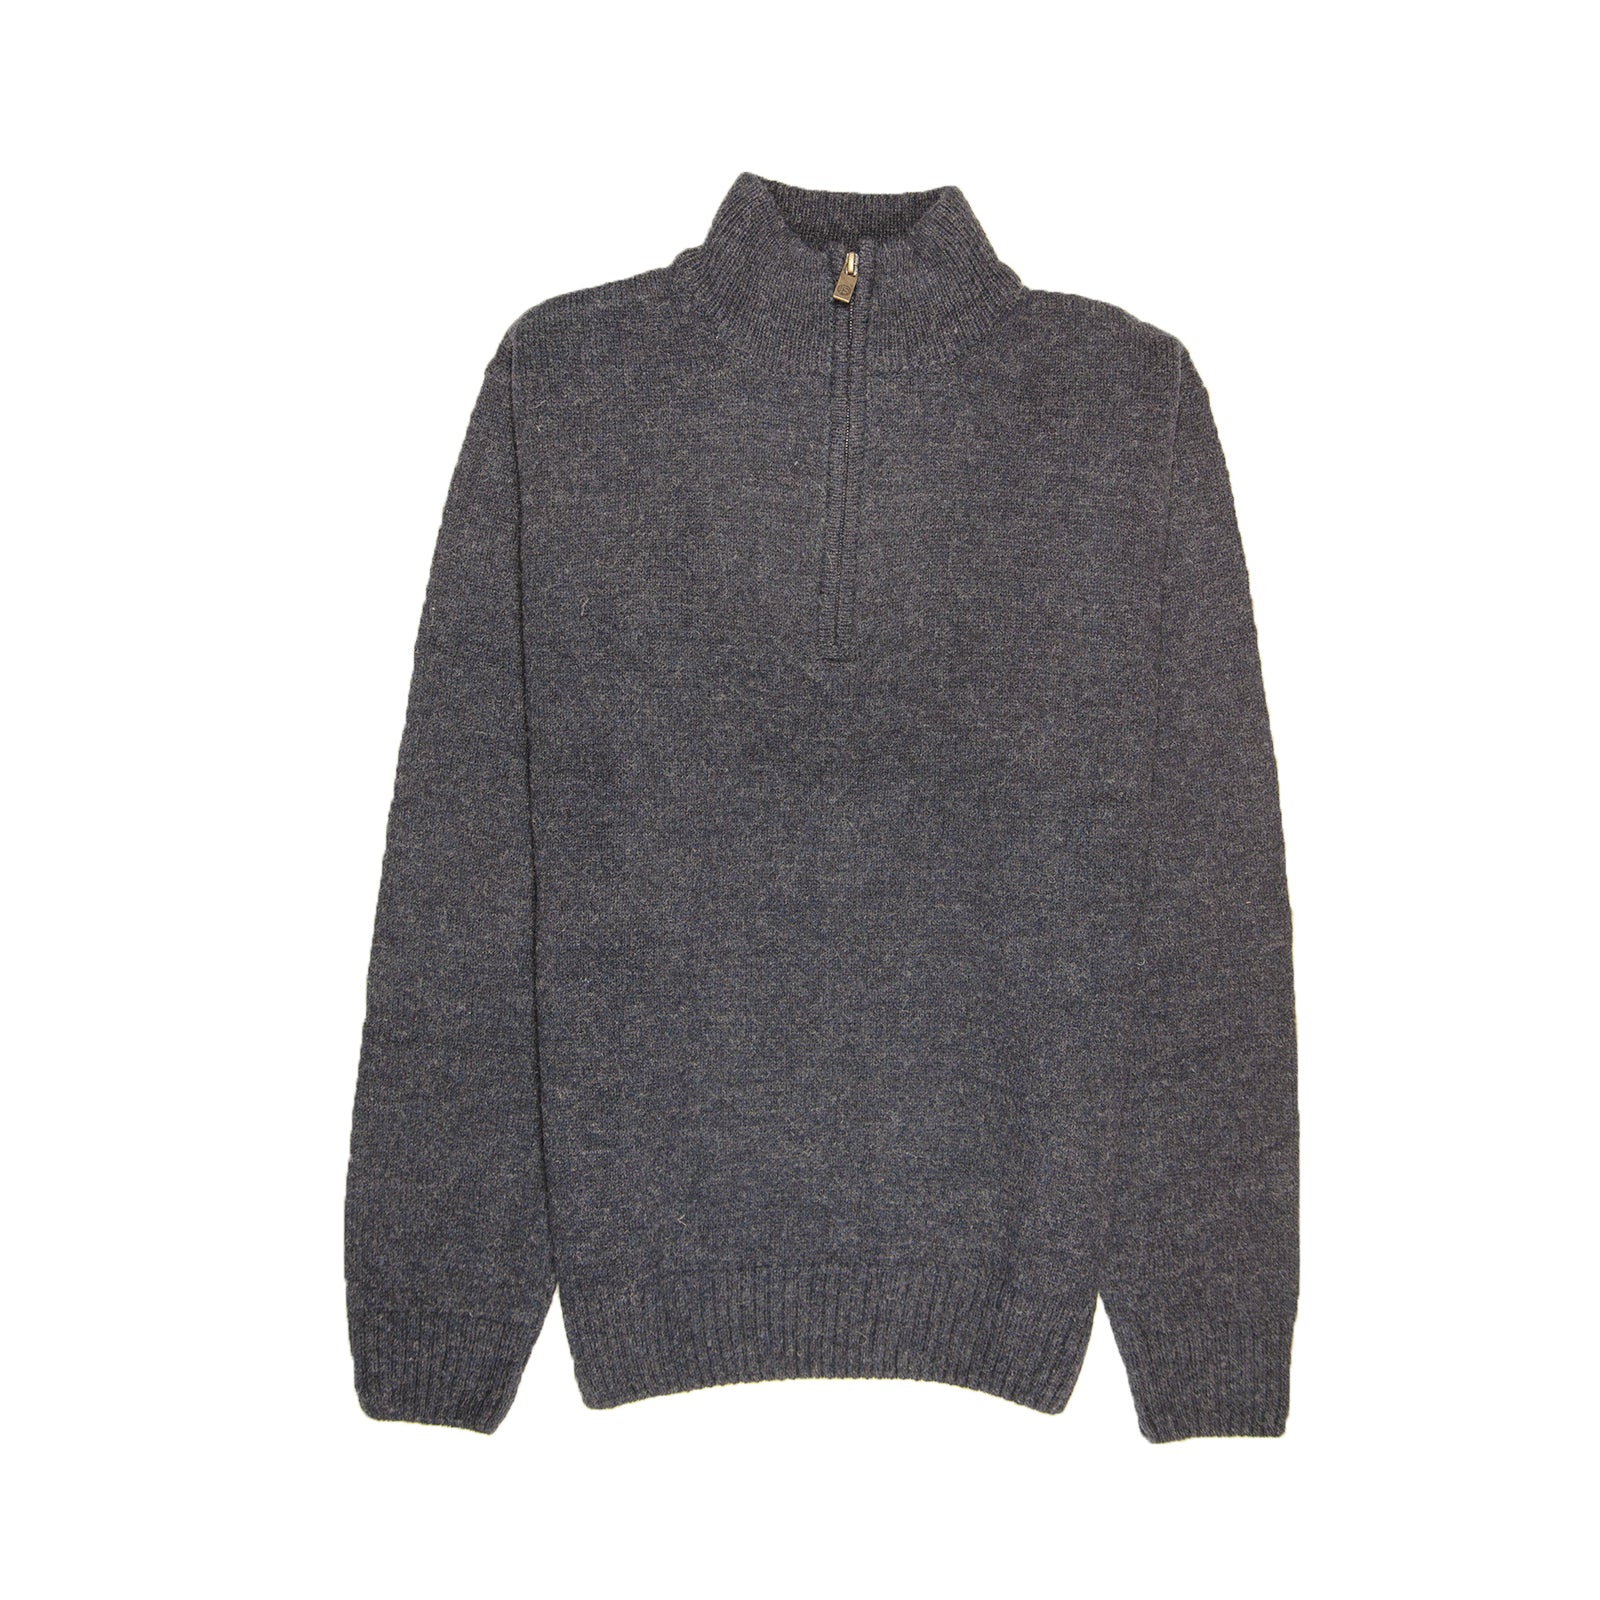 100% SHETLAND WOOL Half Zip Up Knit JUMPER Pullover Mens Sweater Knitted - Denim Blue (45) - L